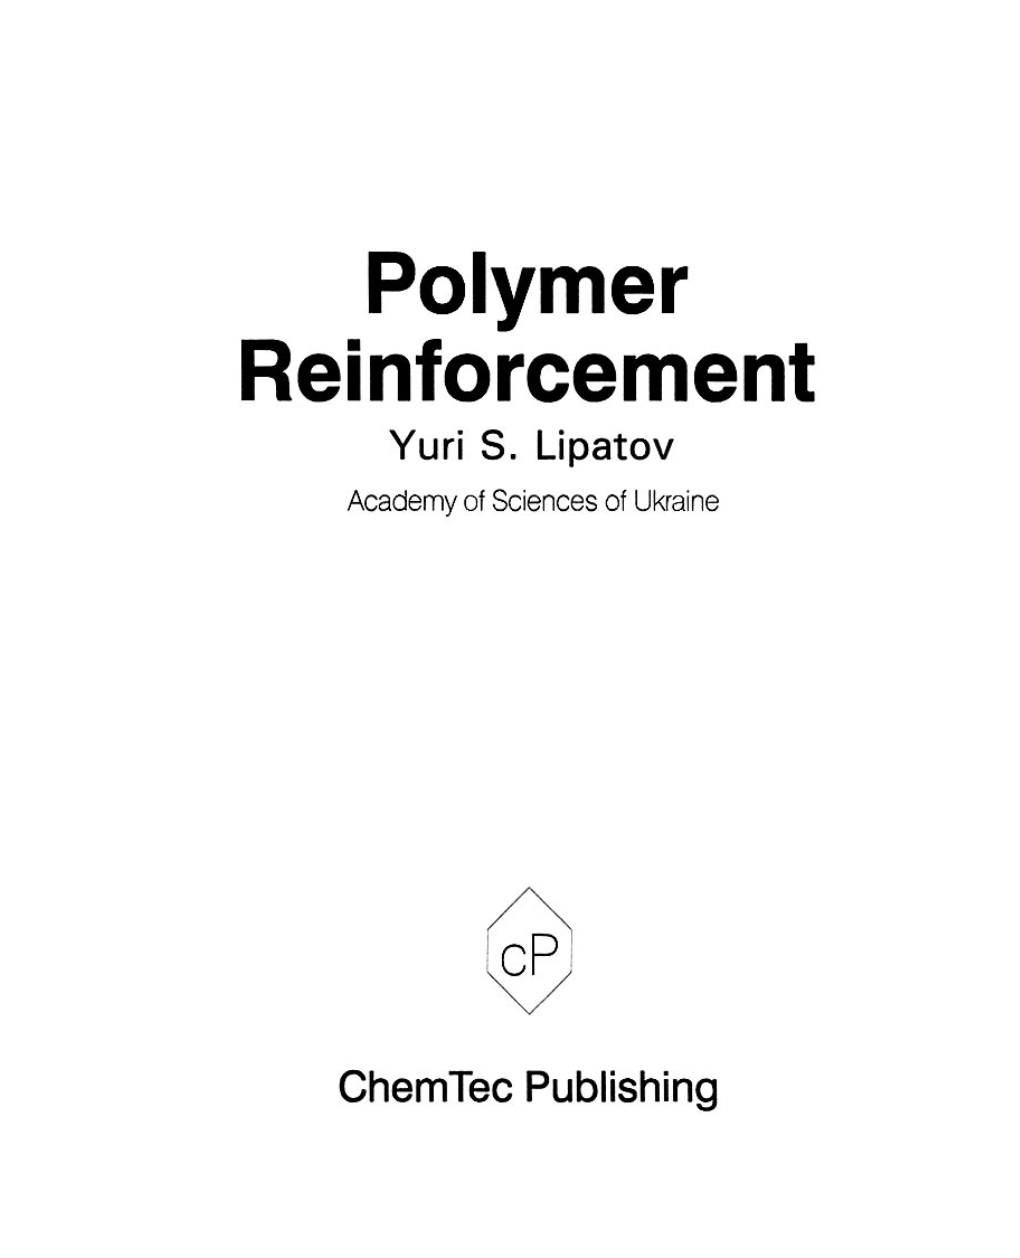 Polymer Reinforcement-Chemtec